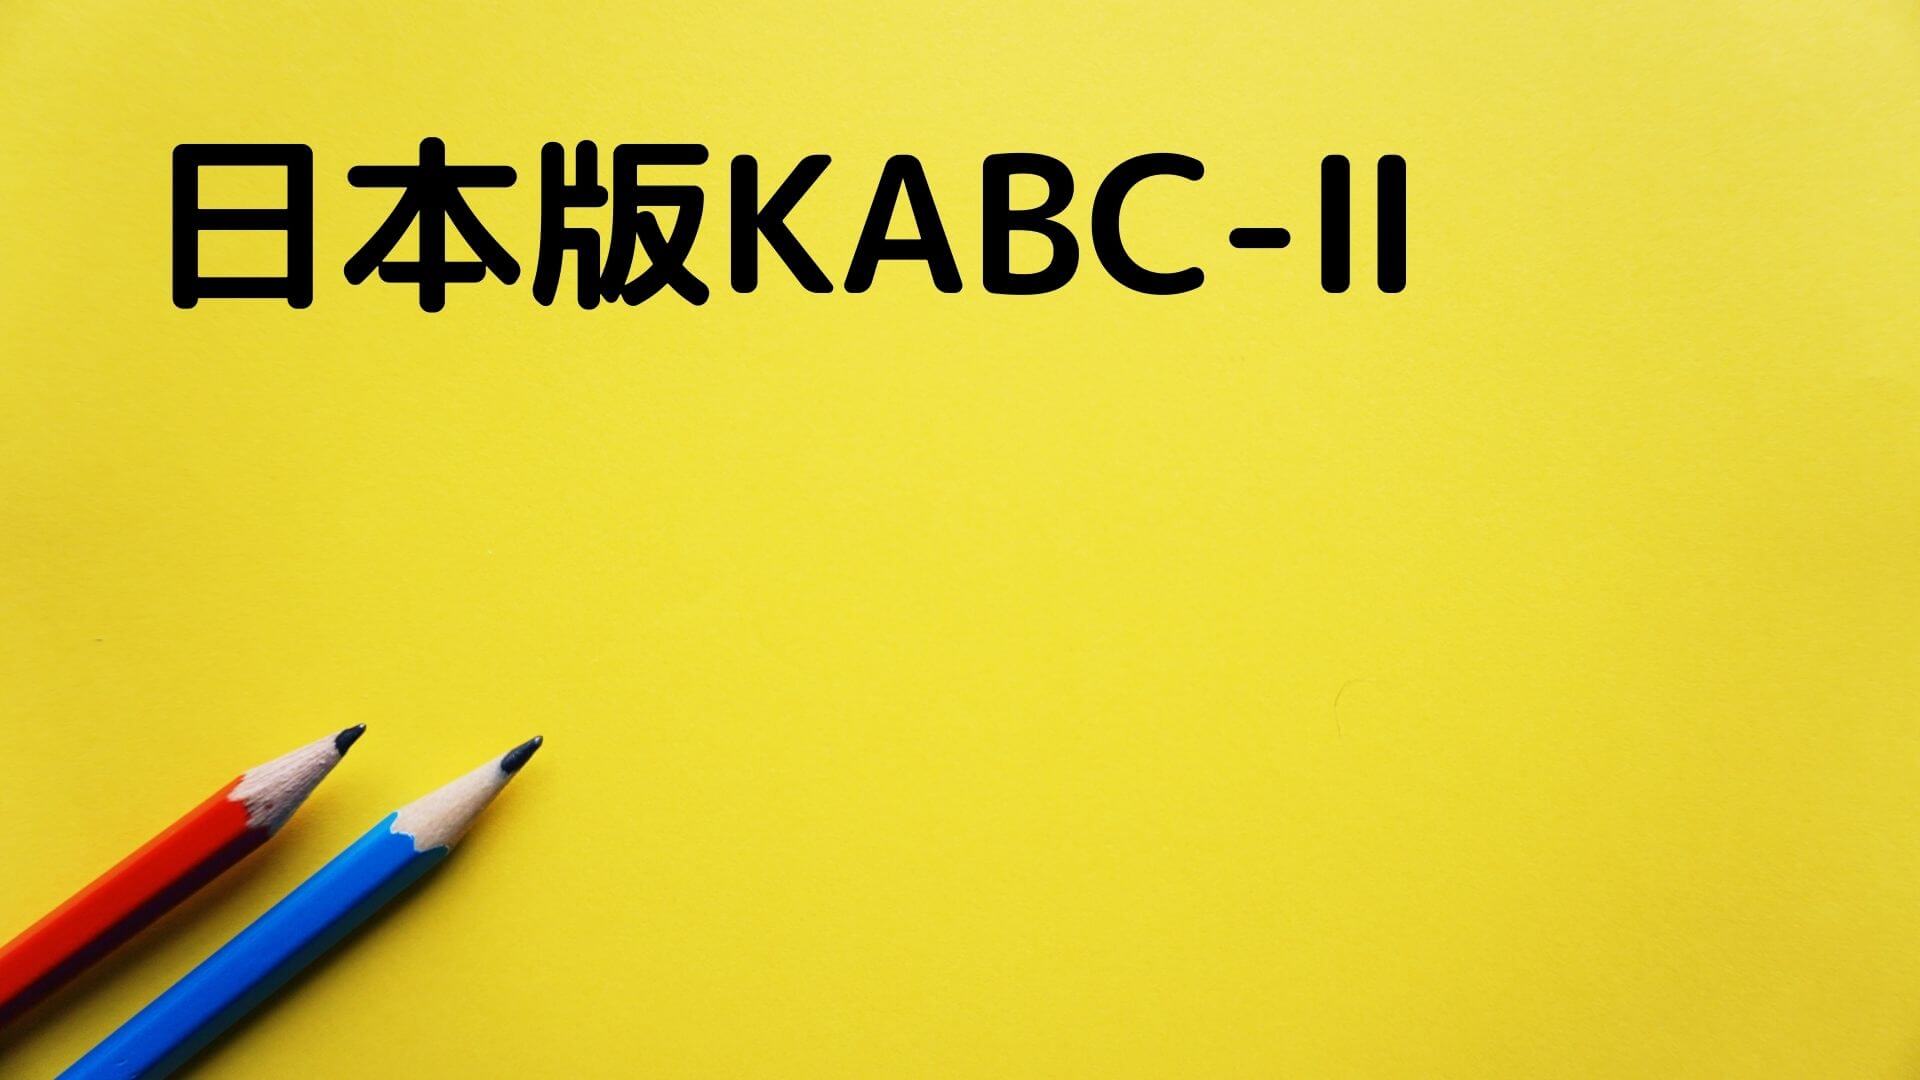 KABC-Ⅱ